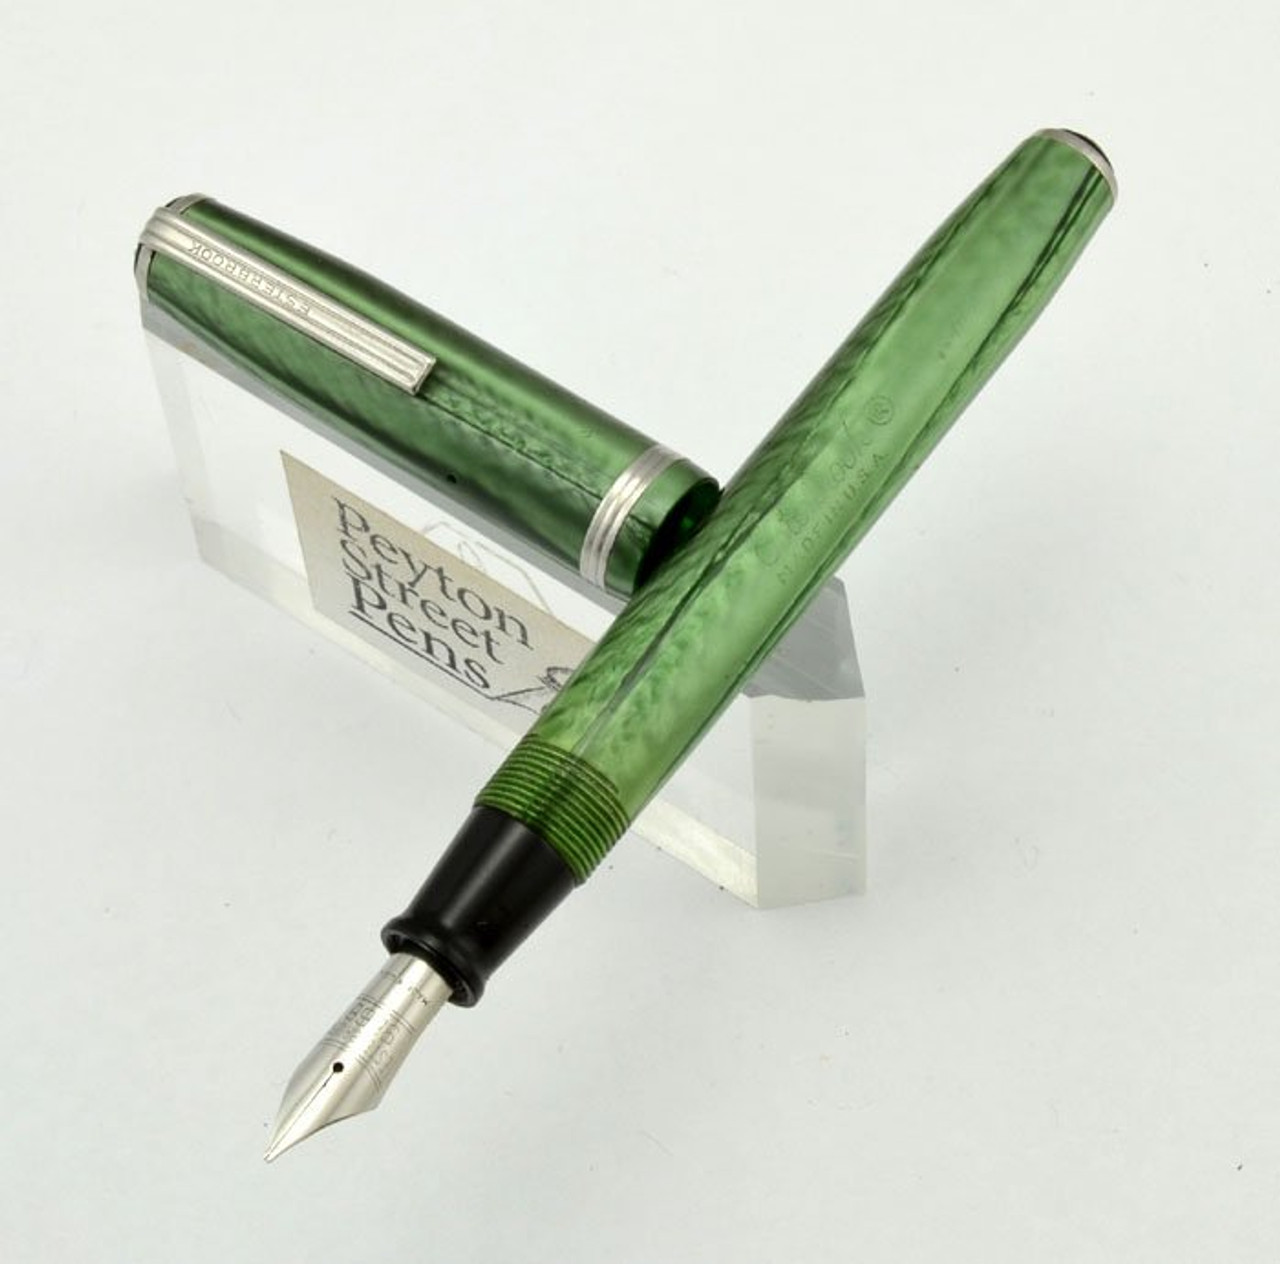 Esterbrook J Fountain Pen - Green, 9668 Medium Nib (Very Nice, Restored)